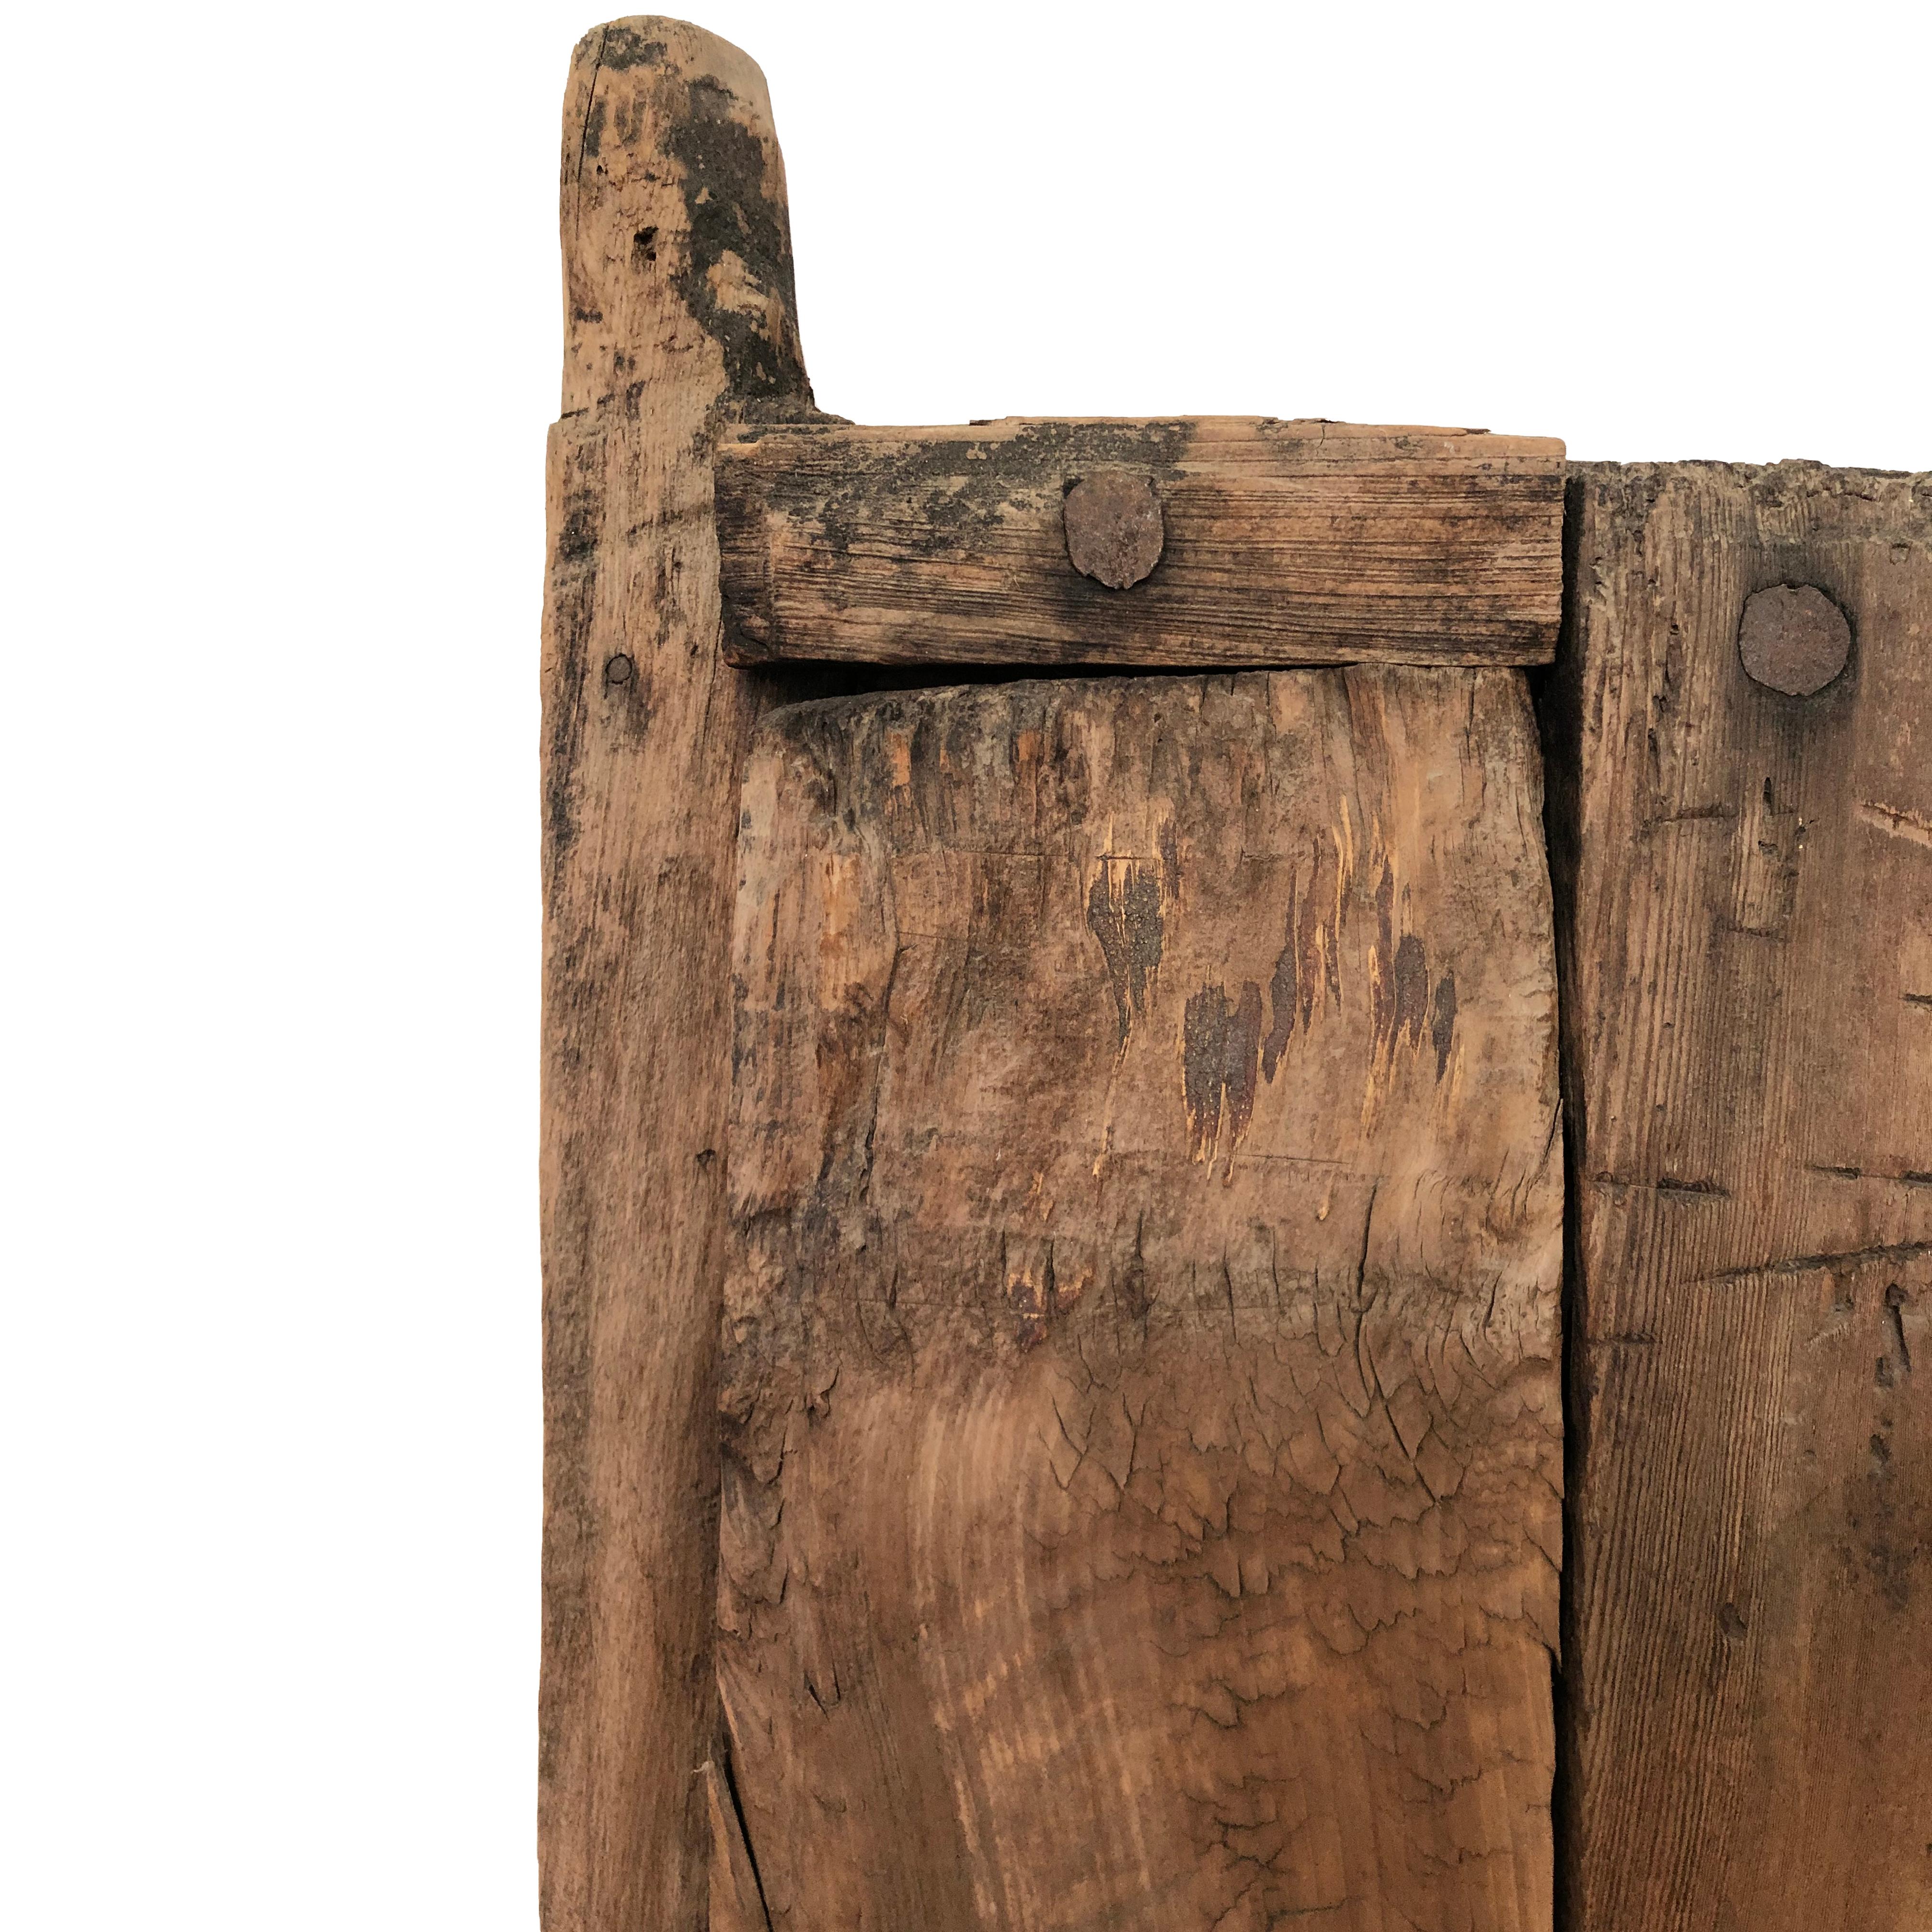 Rustic 19th Century Sabino Wood Door Found in Western México